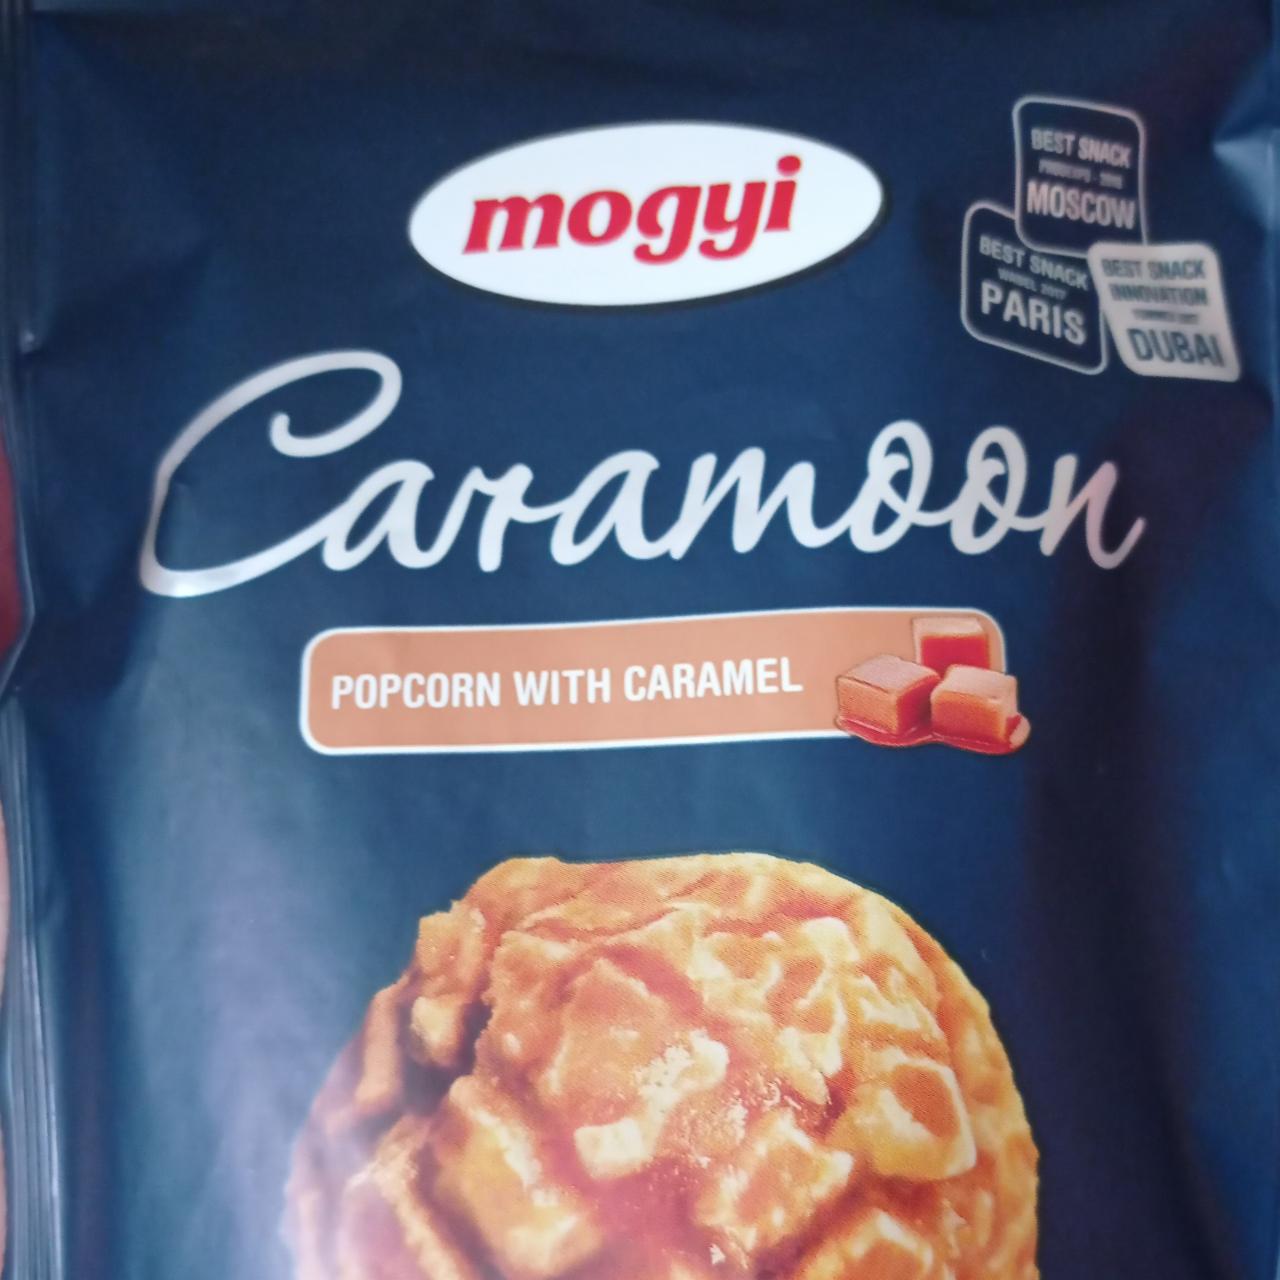 Zdjęcia - Caramoon Popcorn with Caramel Mogyi